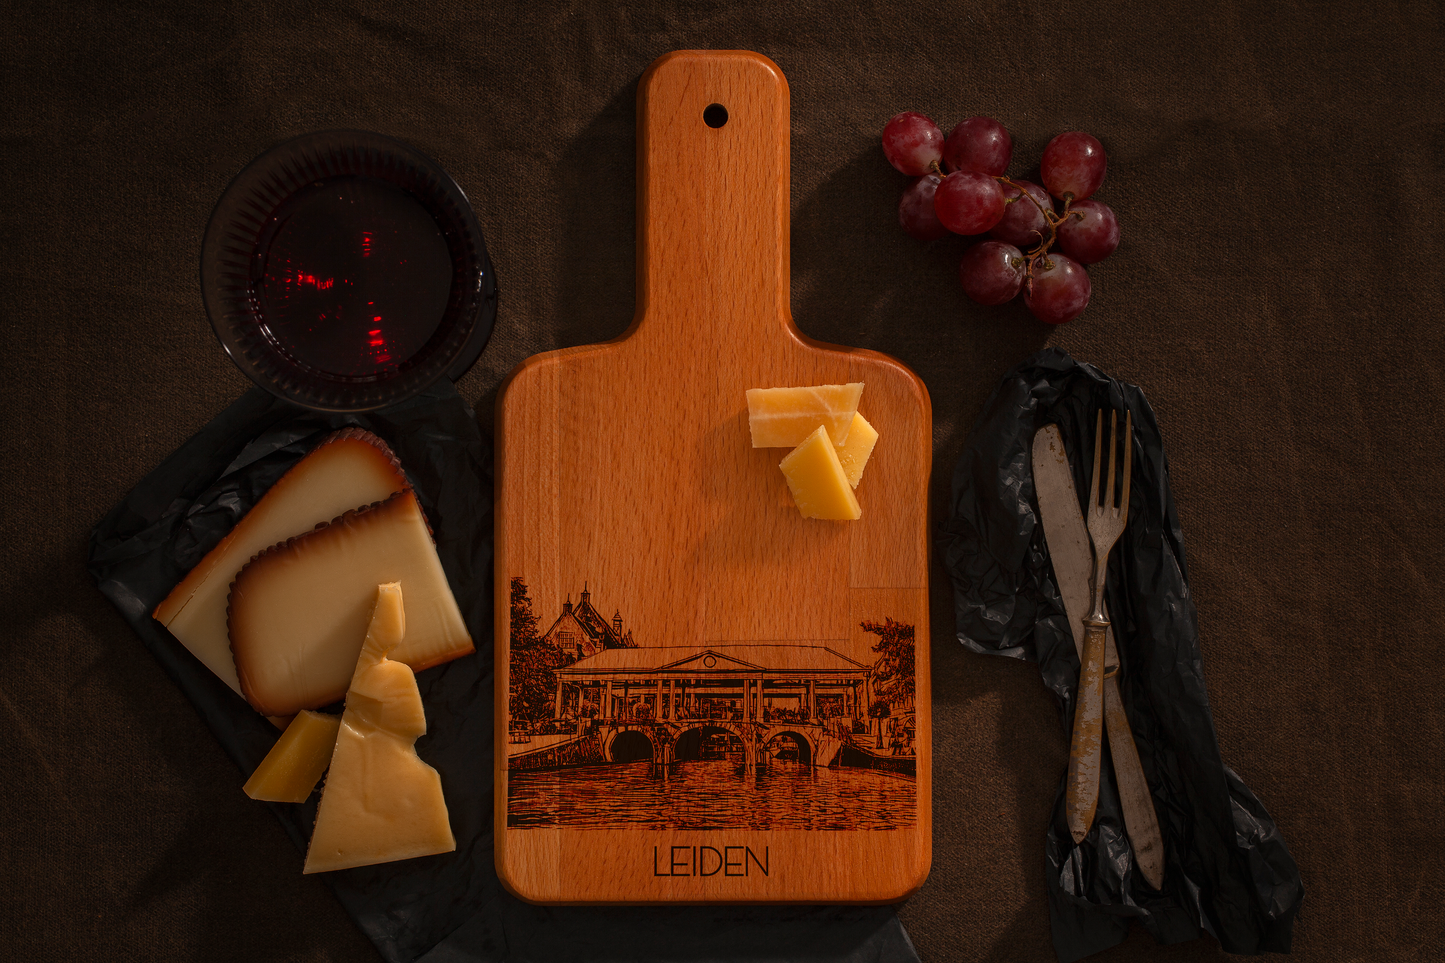 Leiden, Koornbrug, cheese board, with cheese